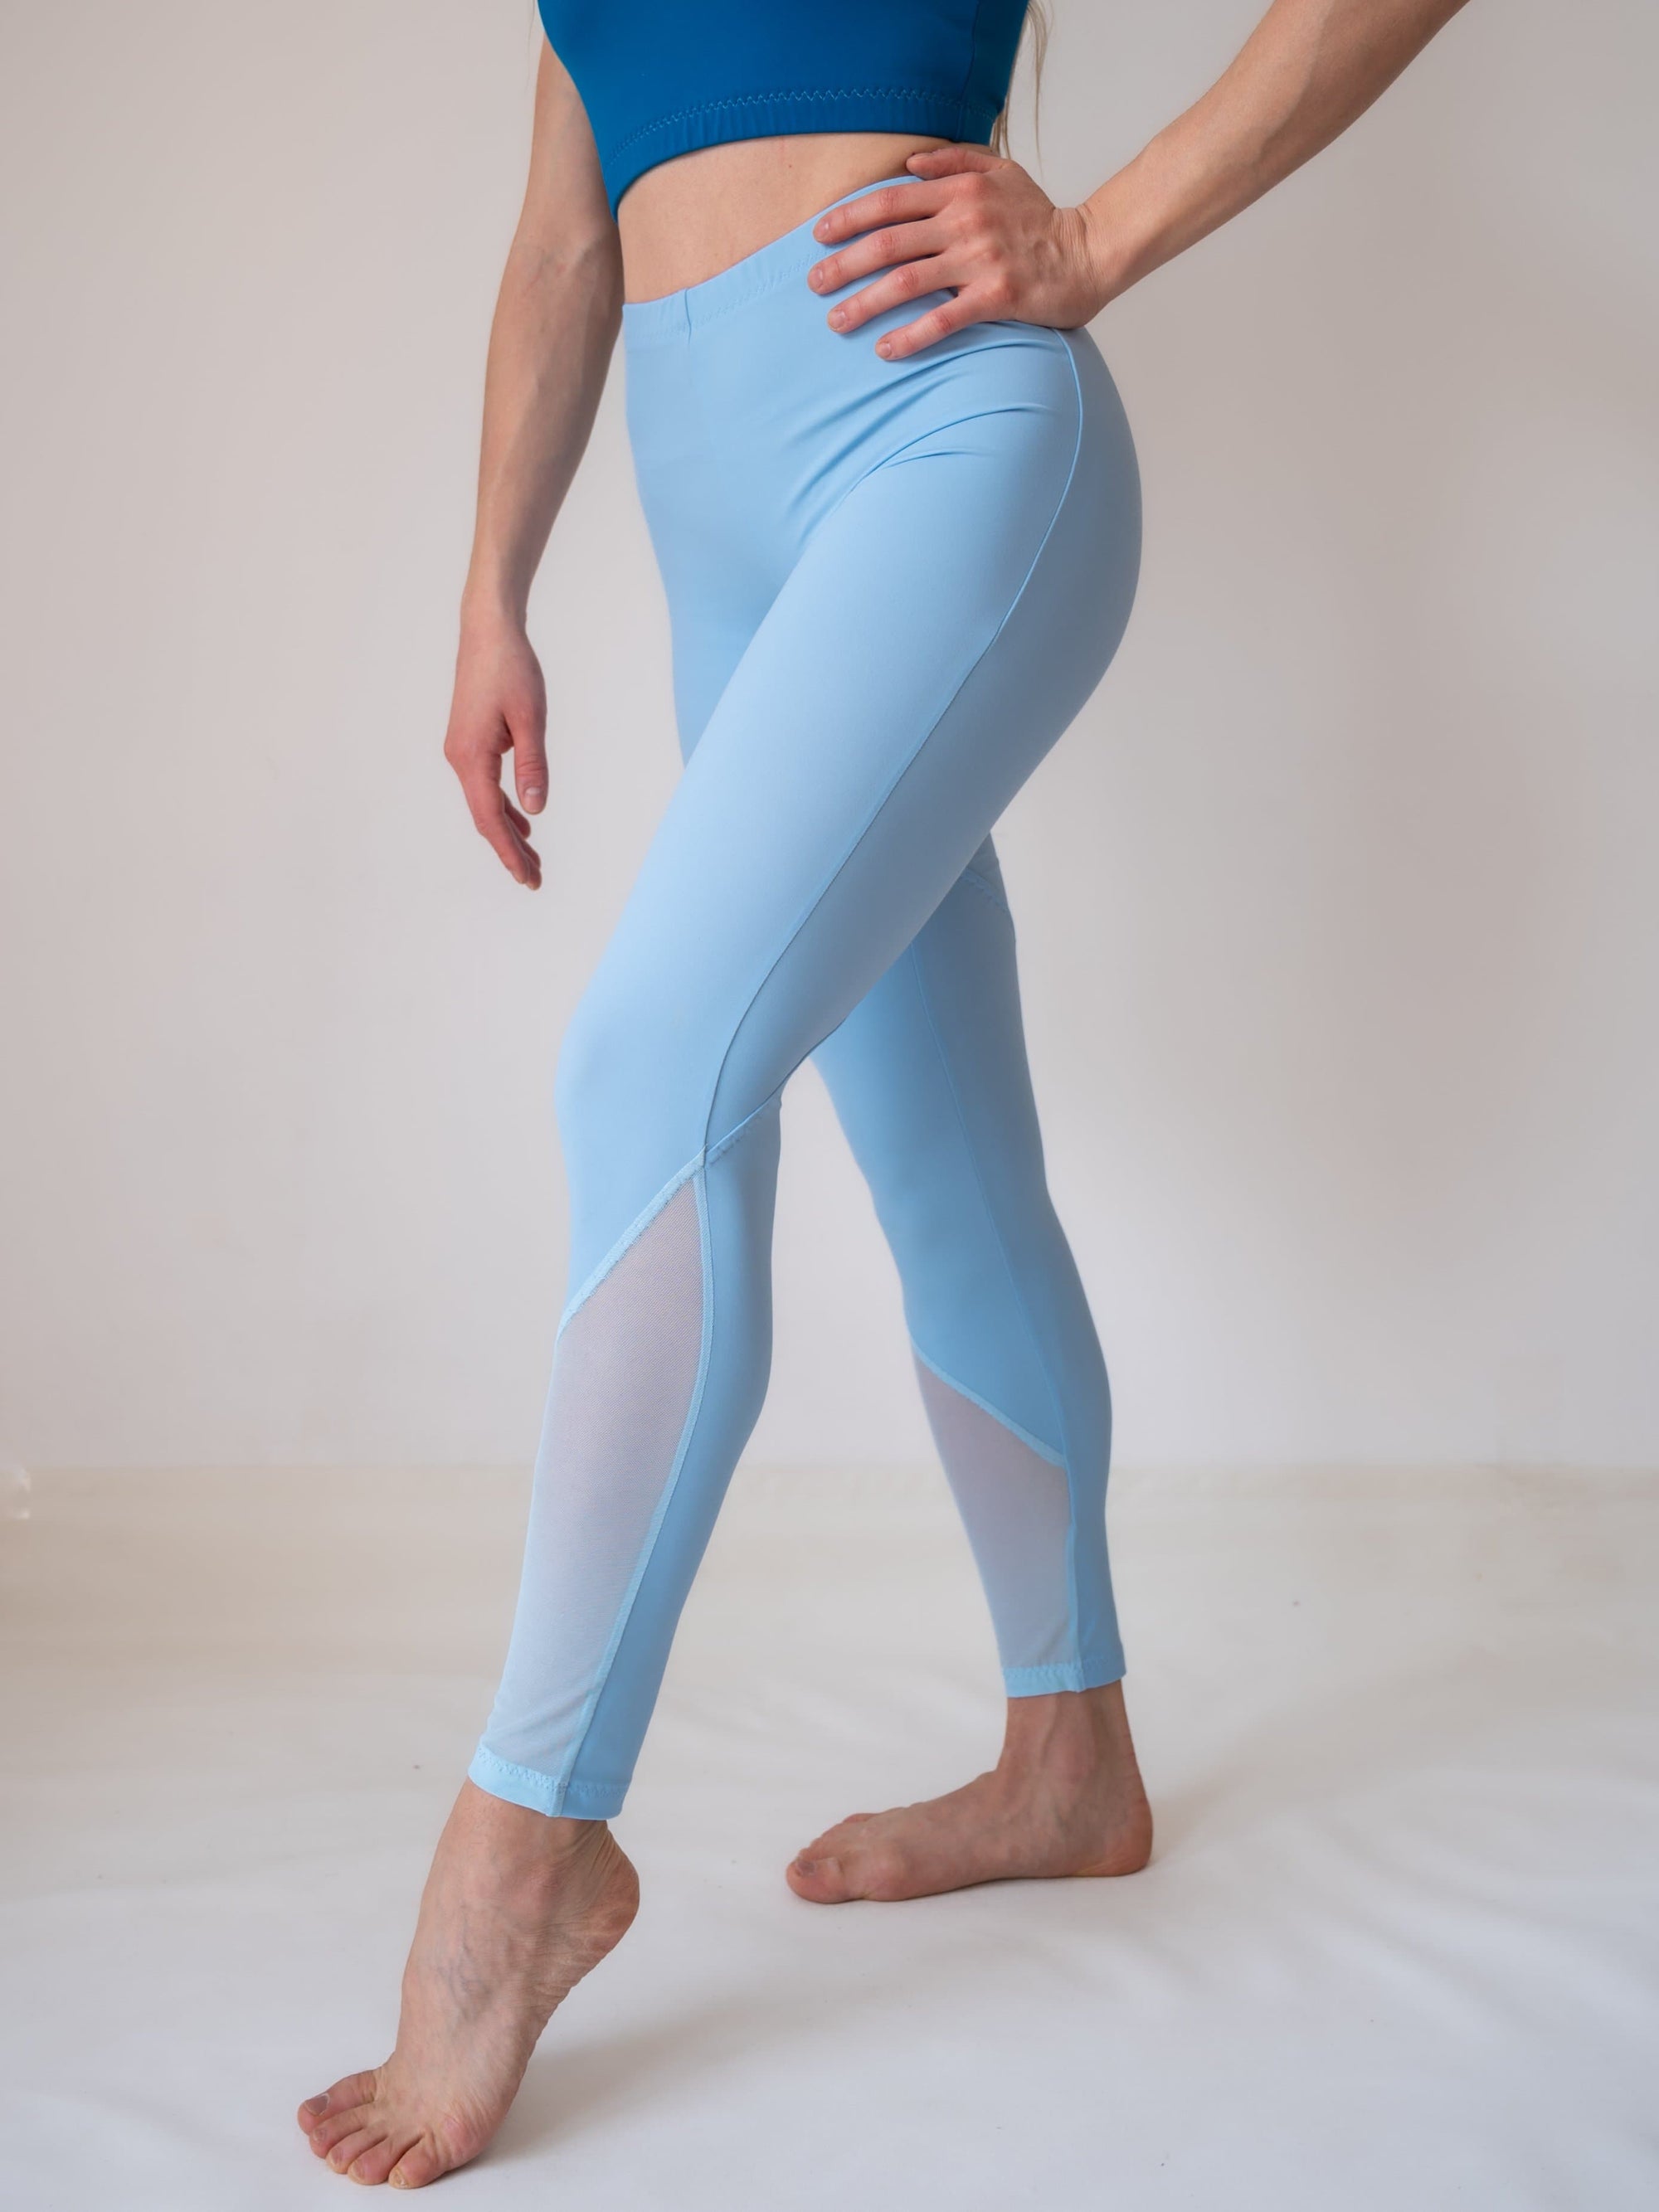 Victoria Sport light blue mesh criss cross athletic workout leggings pockets  S